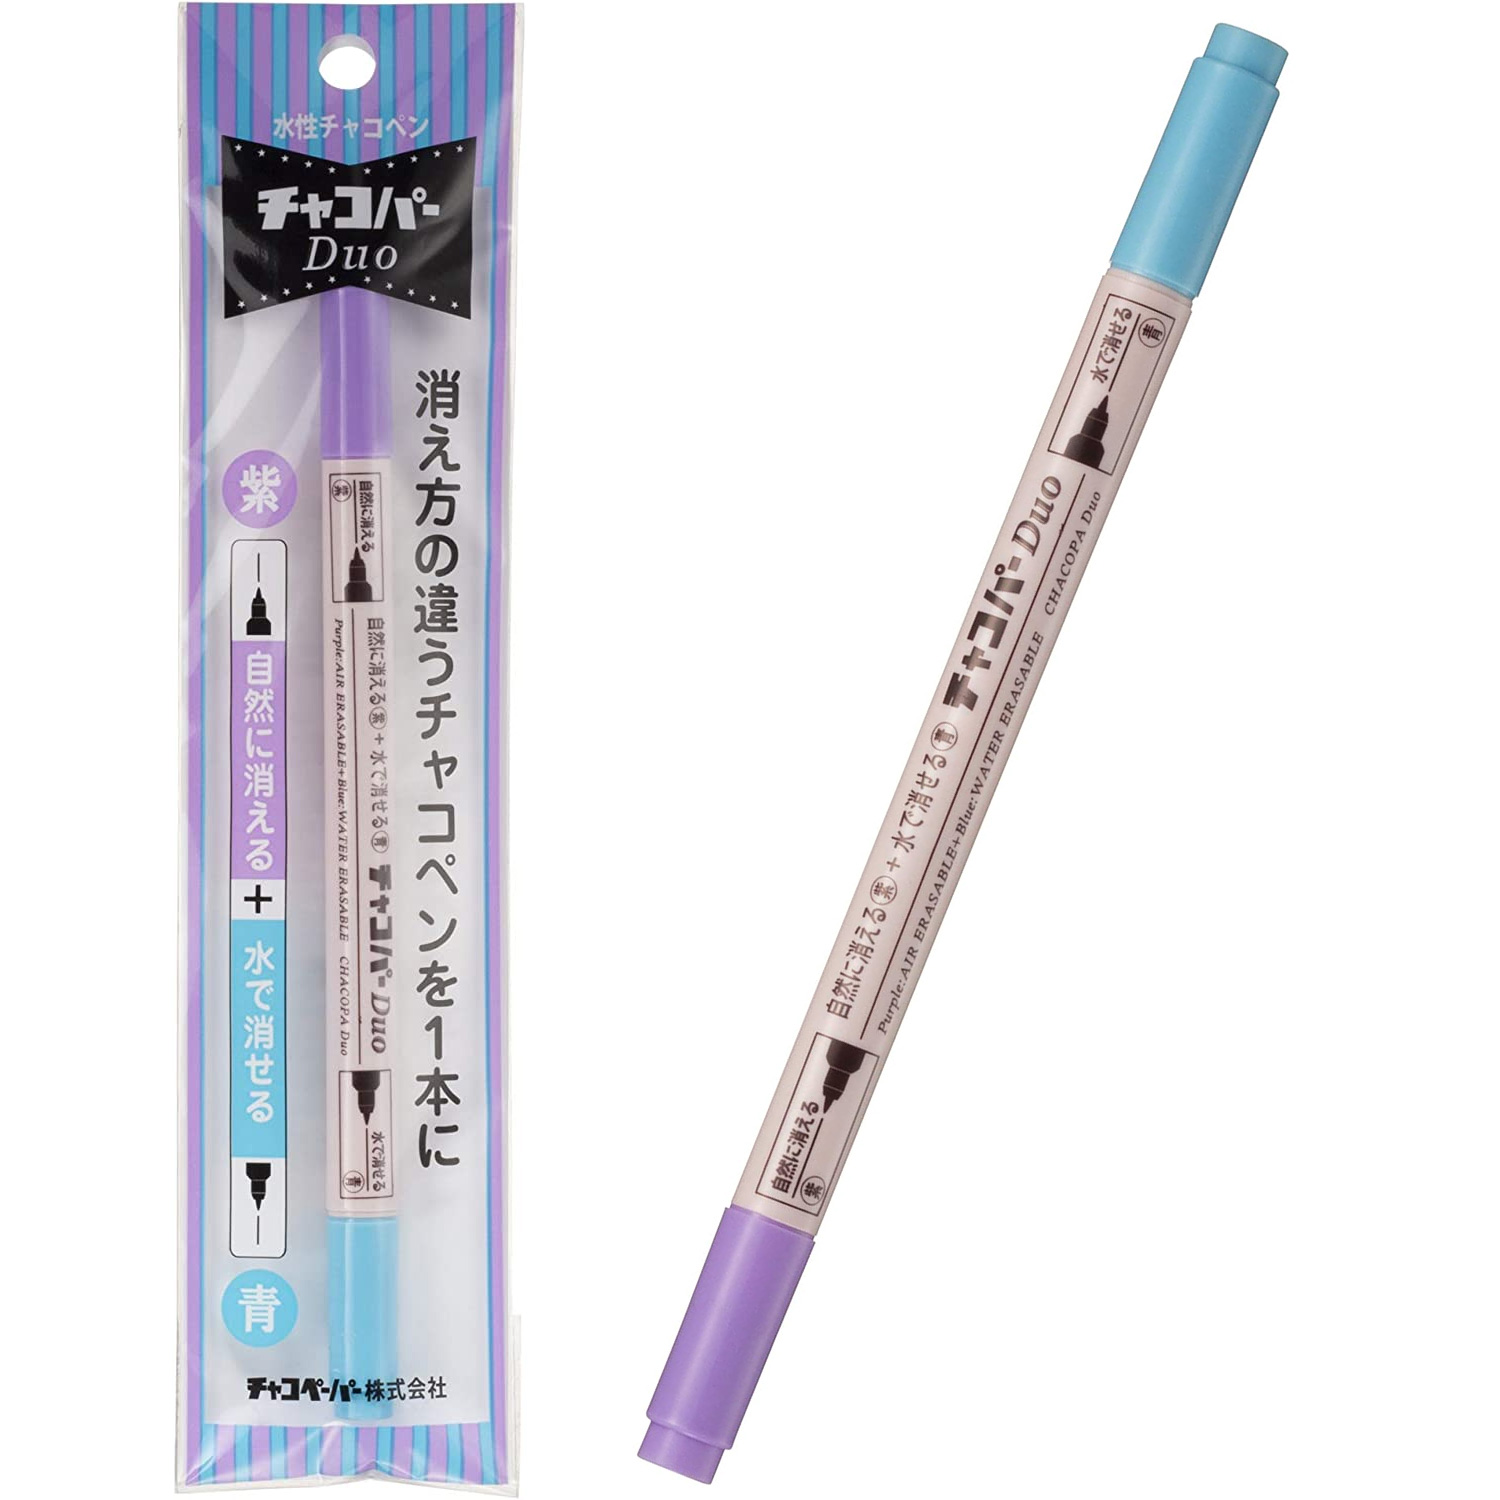 F6-DUO Water-based Chaco Pen Chacopa Duo length 16cm blue + purple (pcs)